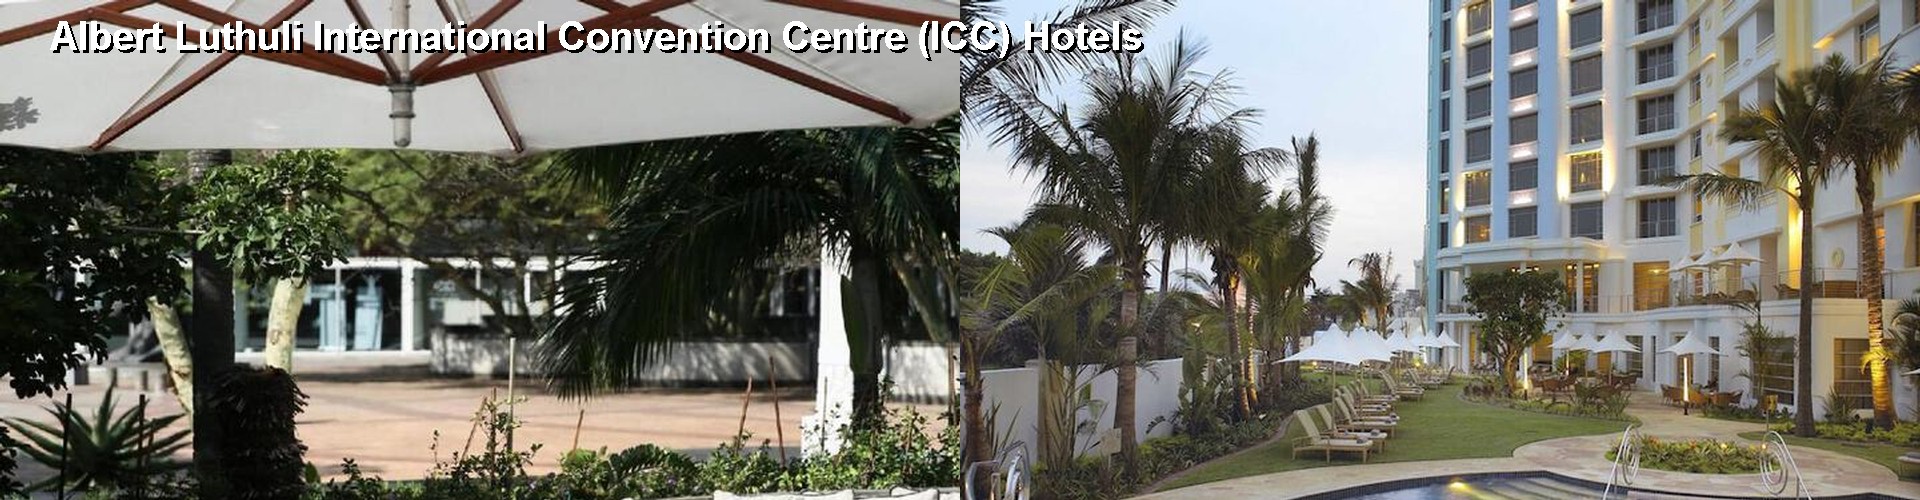 5 Best Hotels near Albert Luthuli International Convention Centre (ICC)